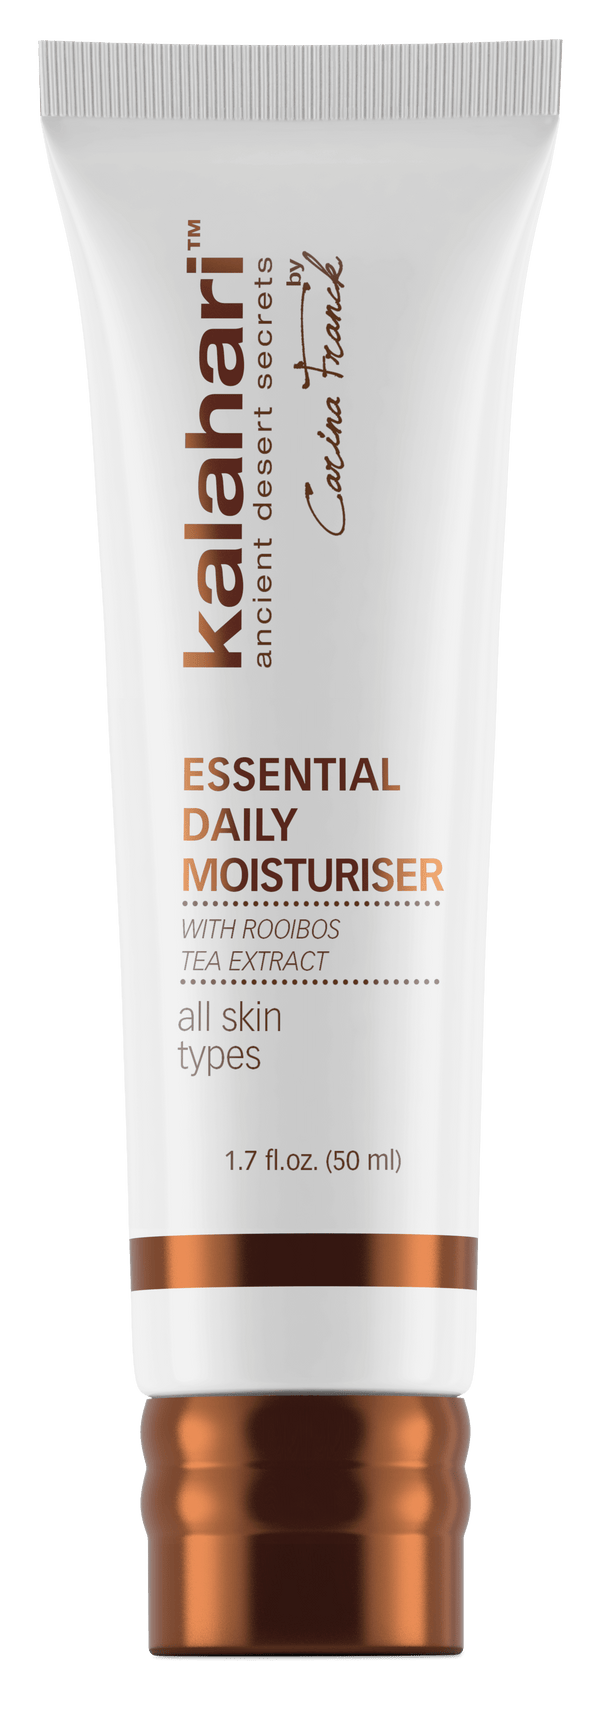 Essential daily moisturiser